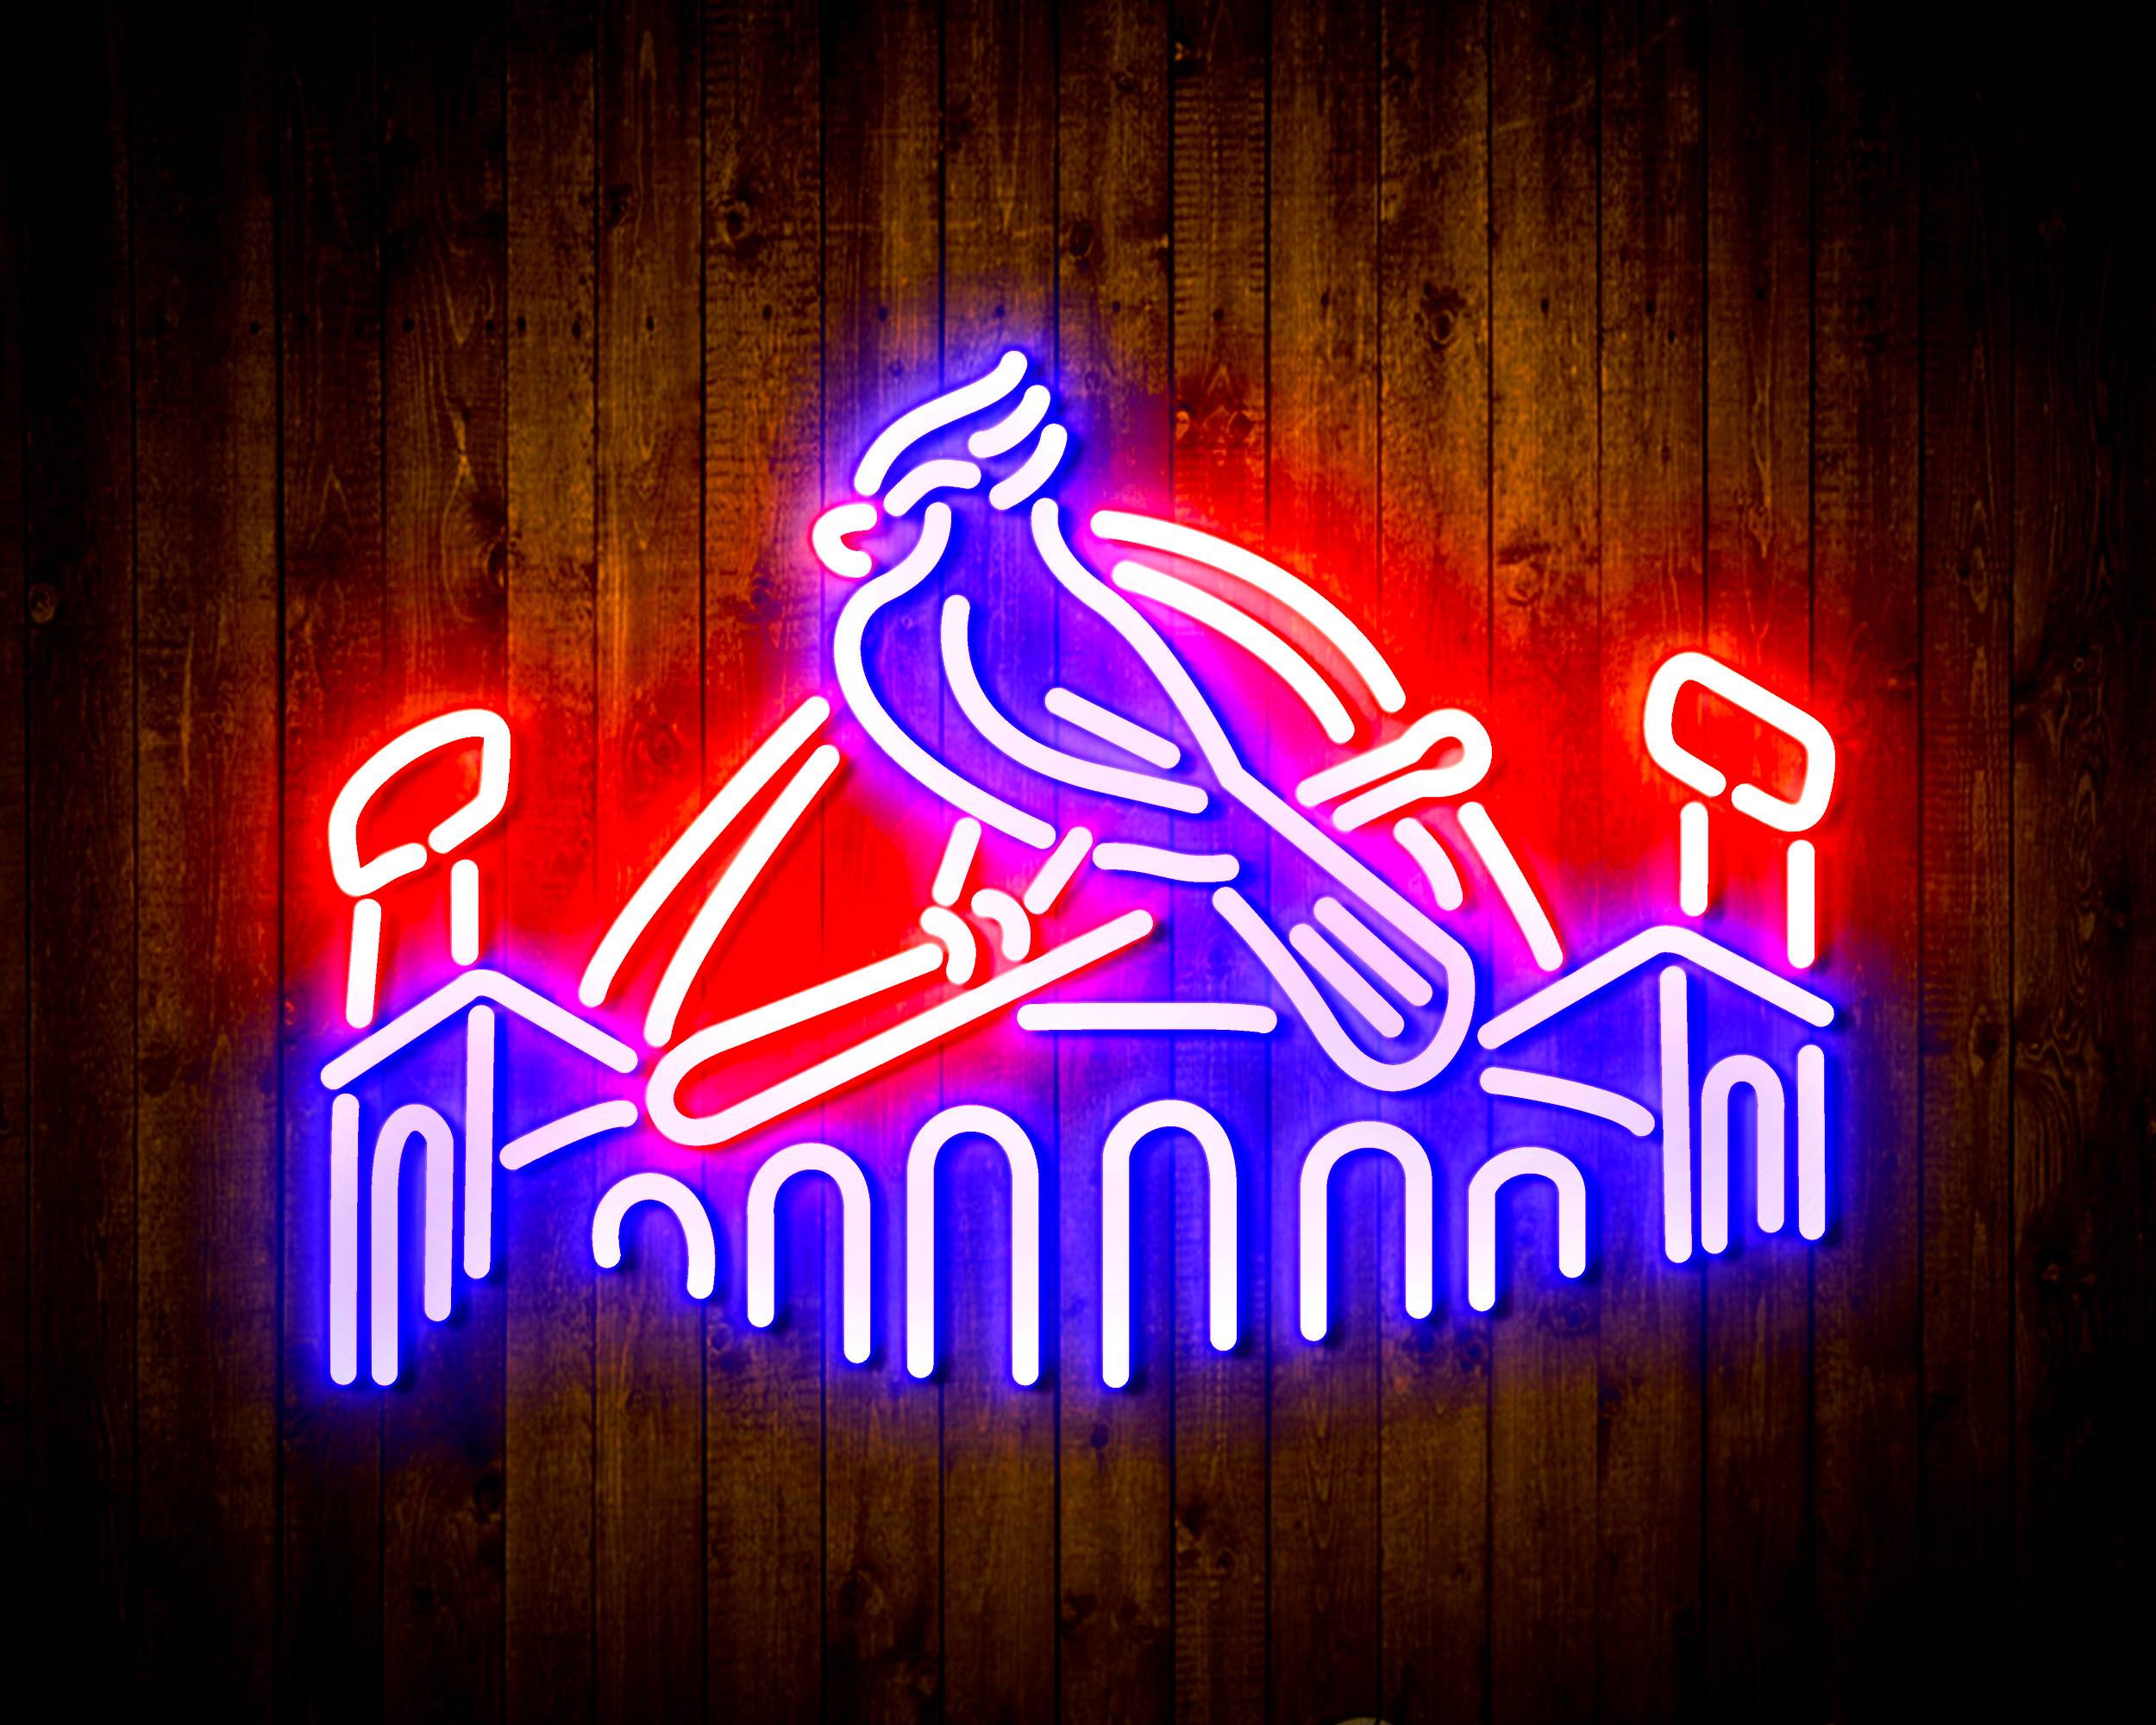 Budweiser with Cardinal Handmade LED Neon Sign